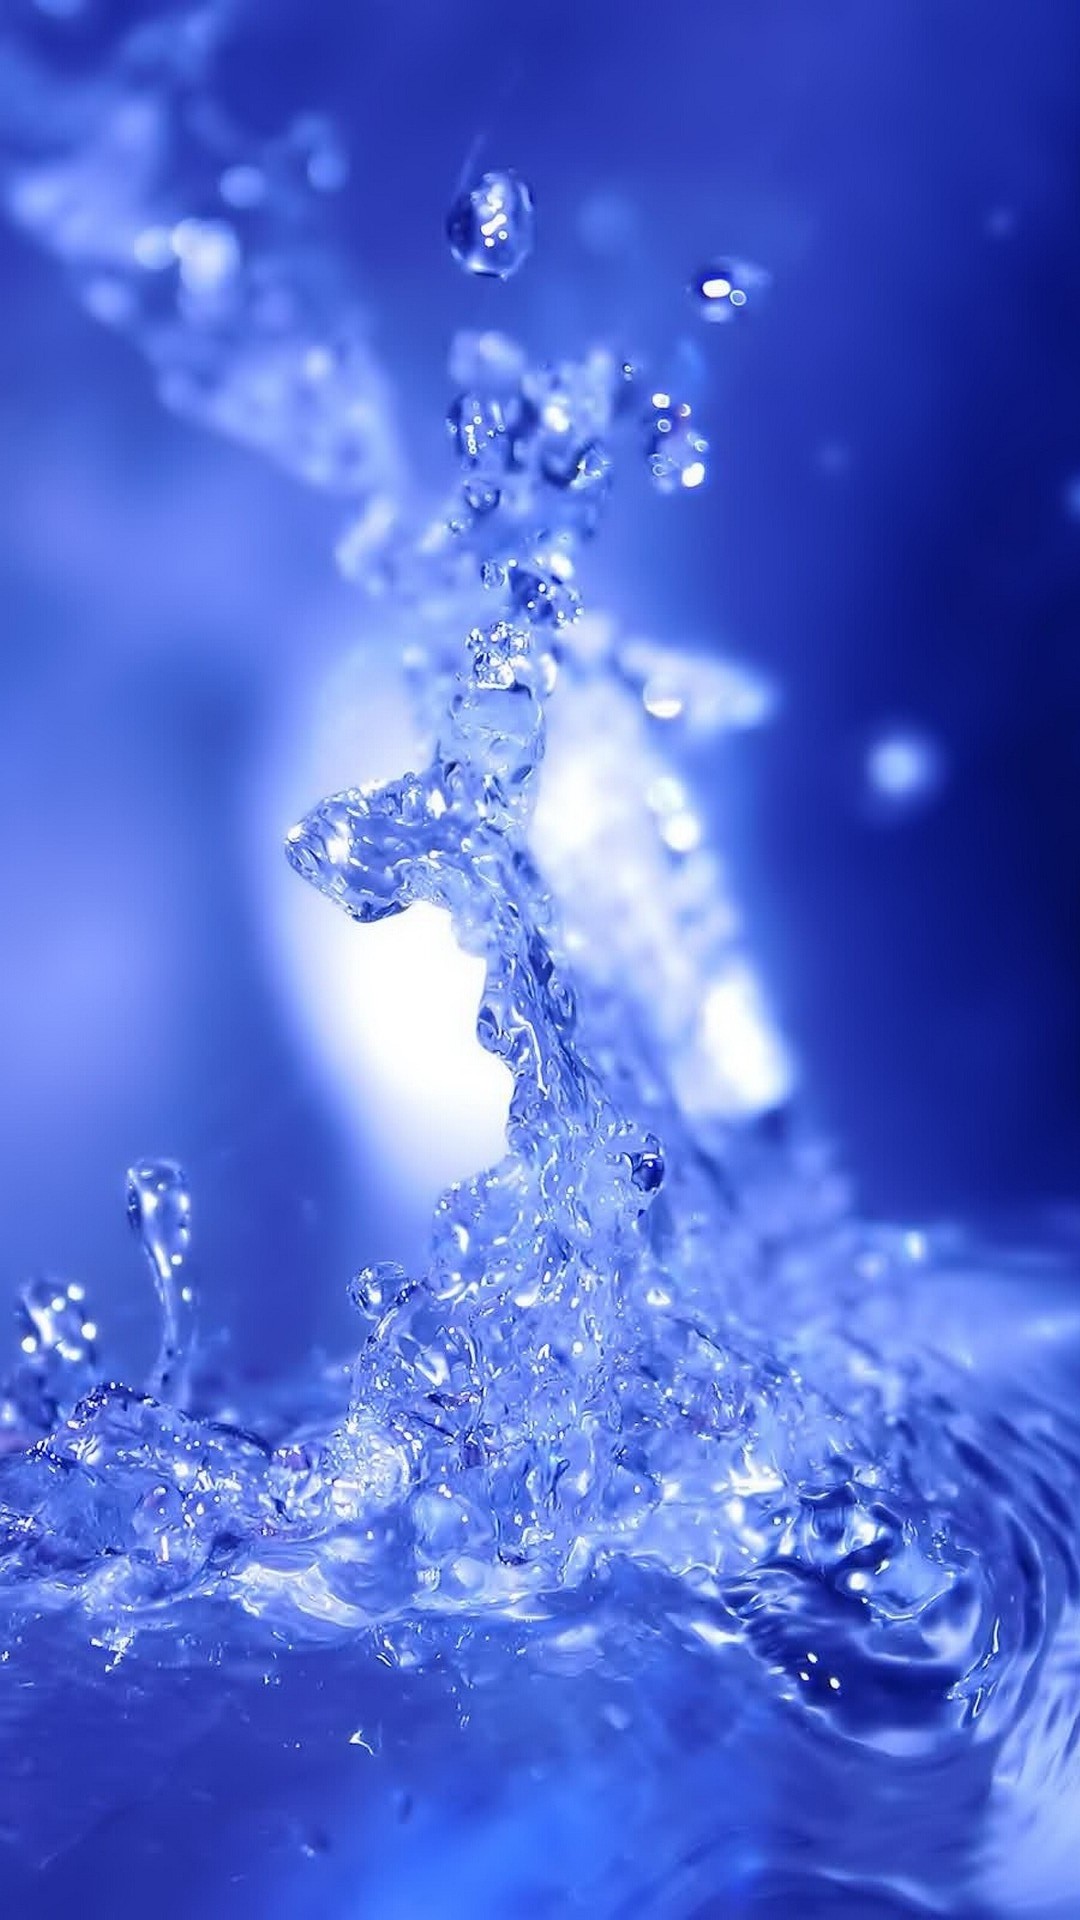 Wallpaper Splash Water Liquid iPhone resolution 1080x1920